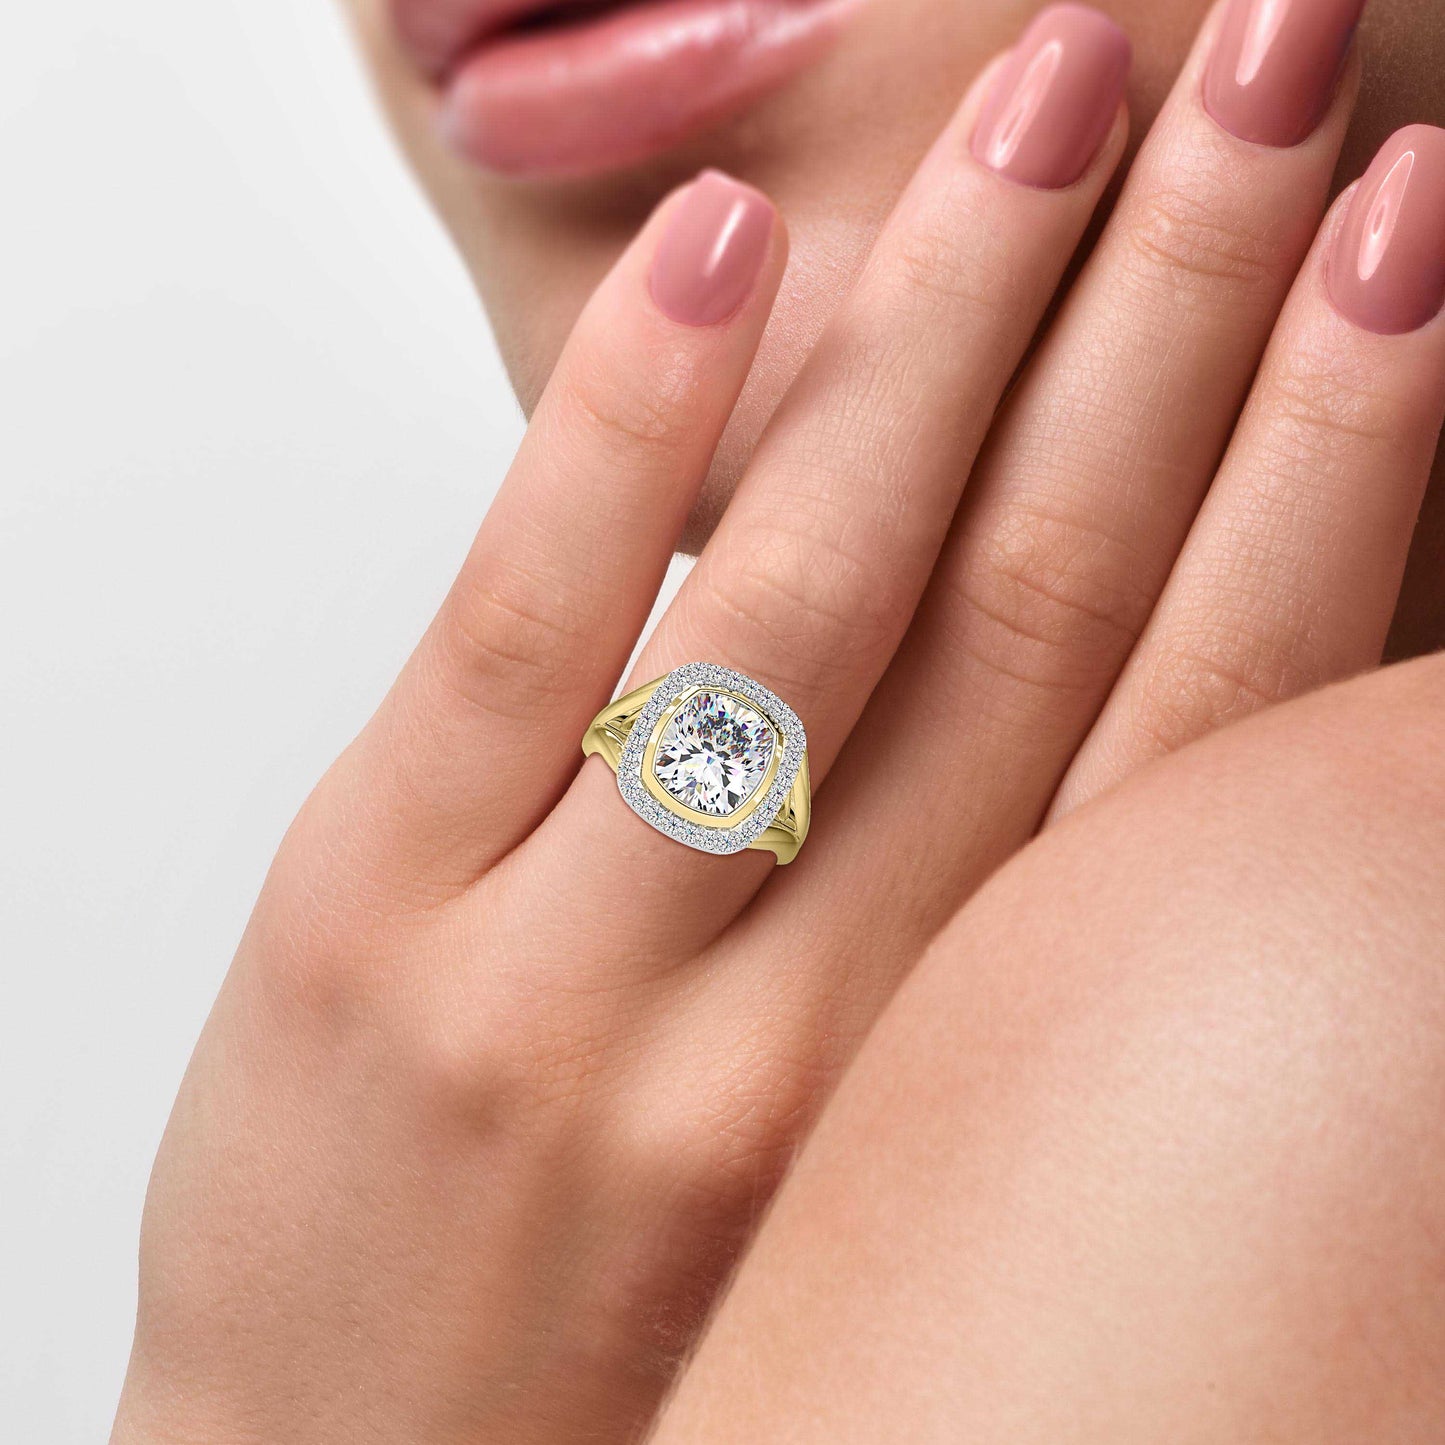 Atavistic Engagement Diamond Ring